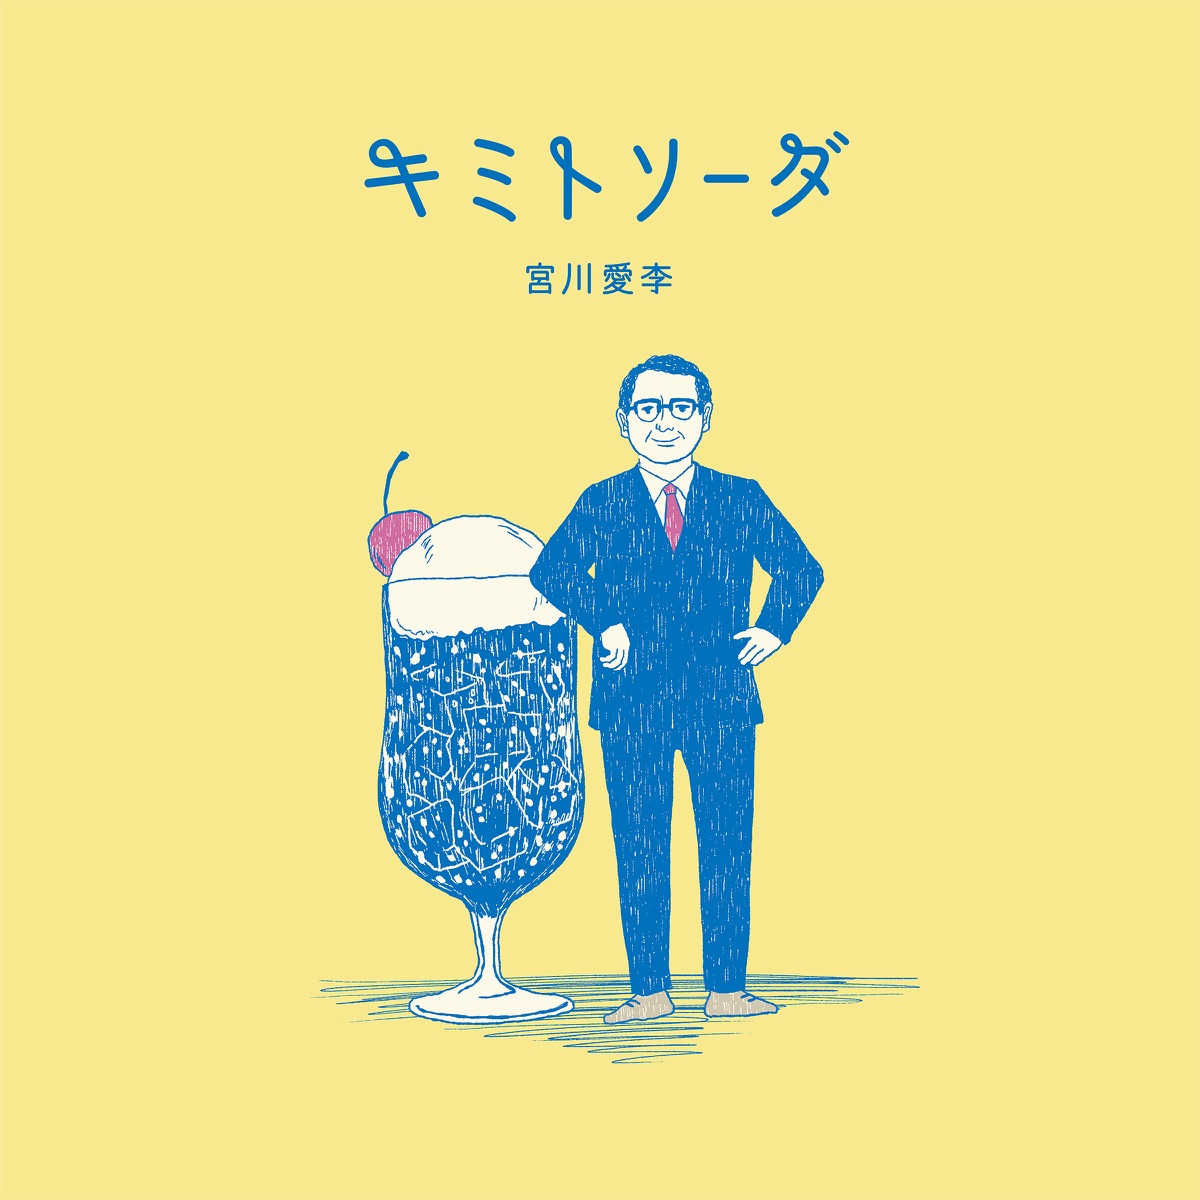 Cover art for『Airi Miyakawa - キミトソーダ』from the release『Kimi to Soda